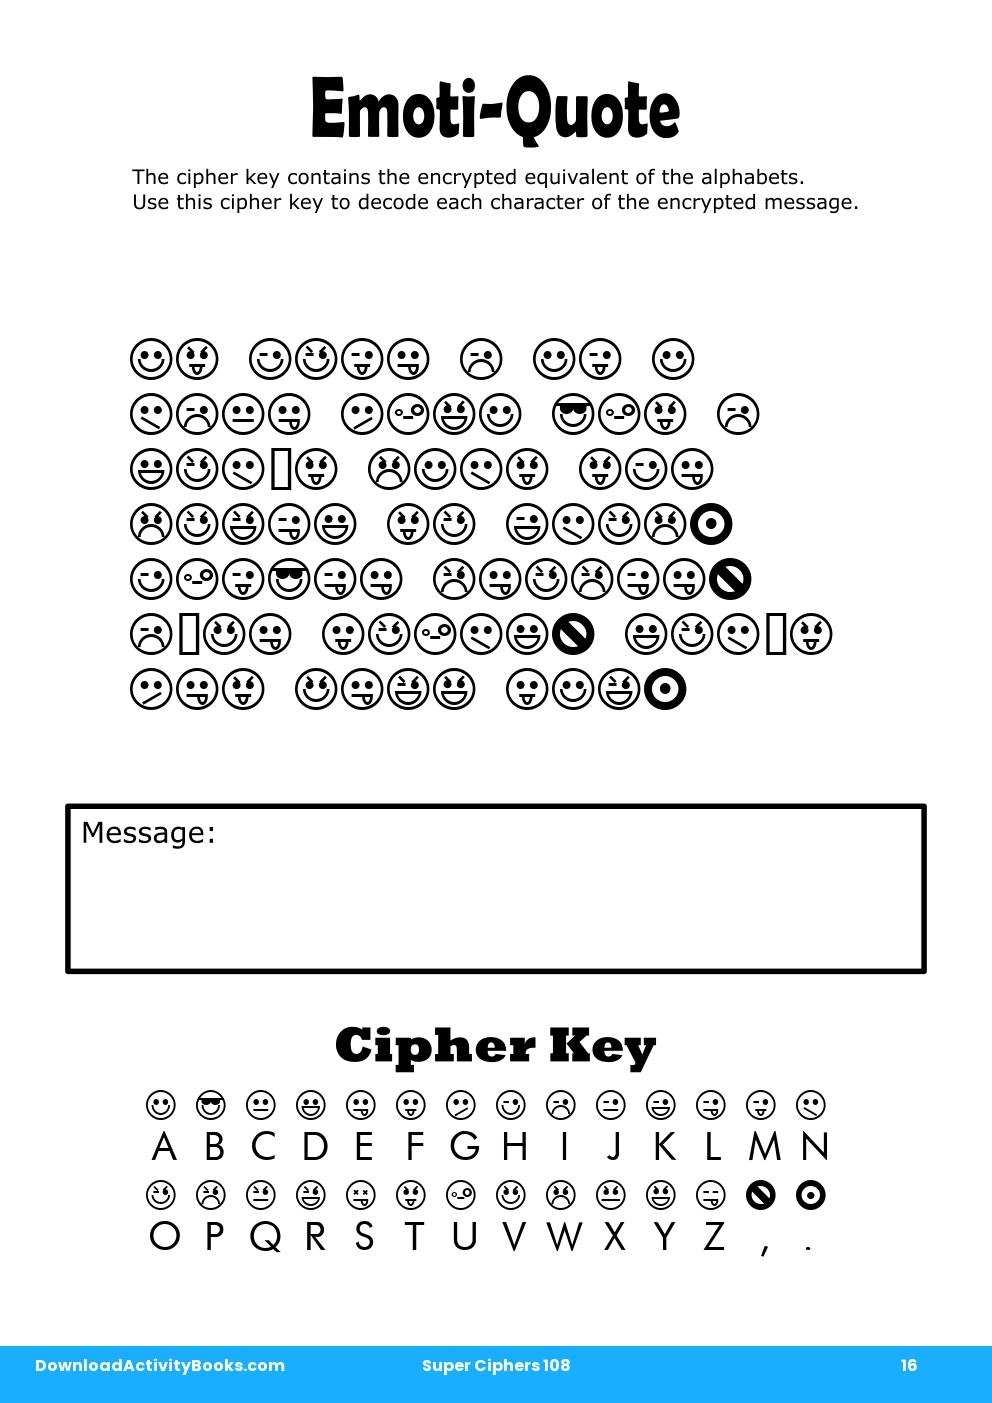 Emoti-Quote in Super Ciphers 108